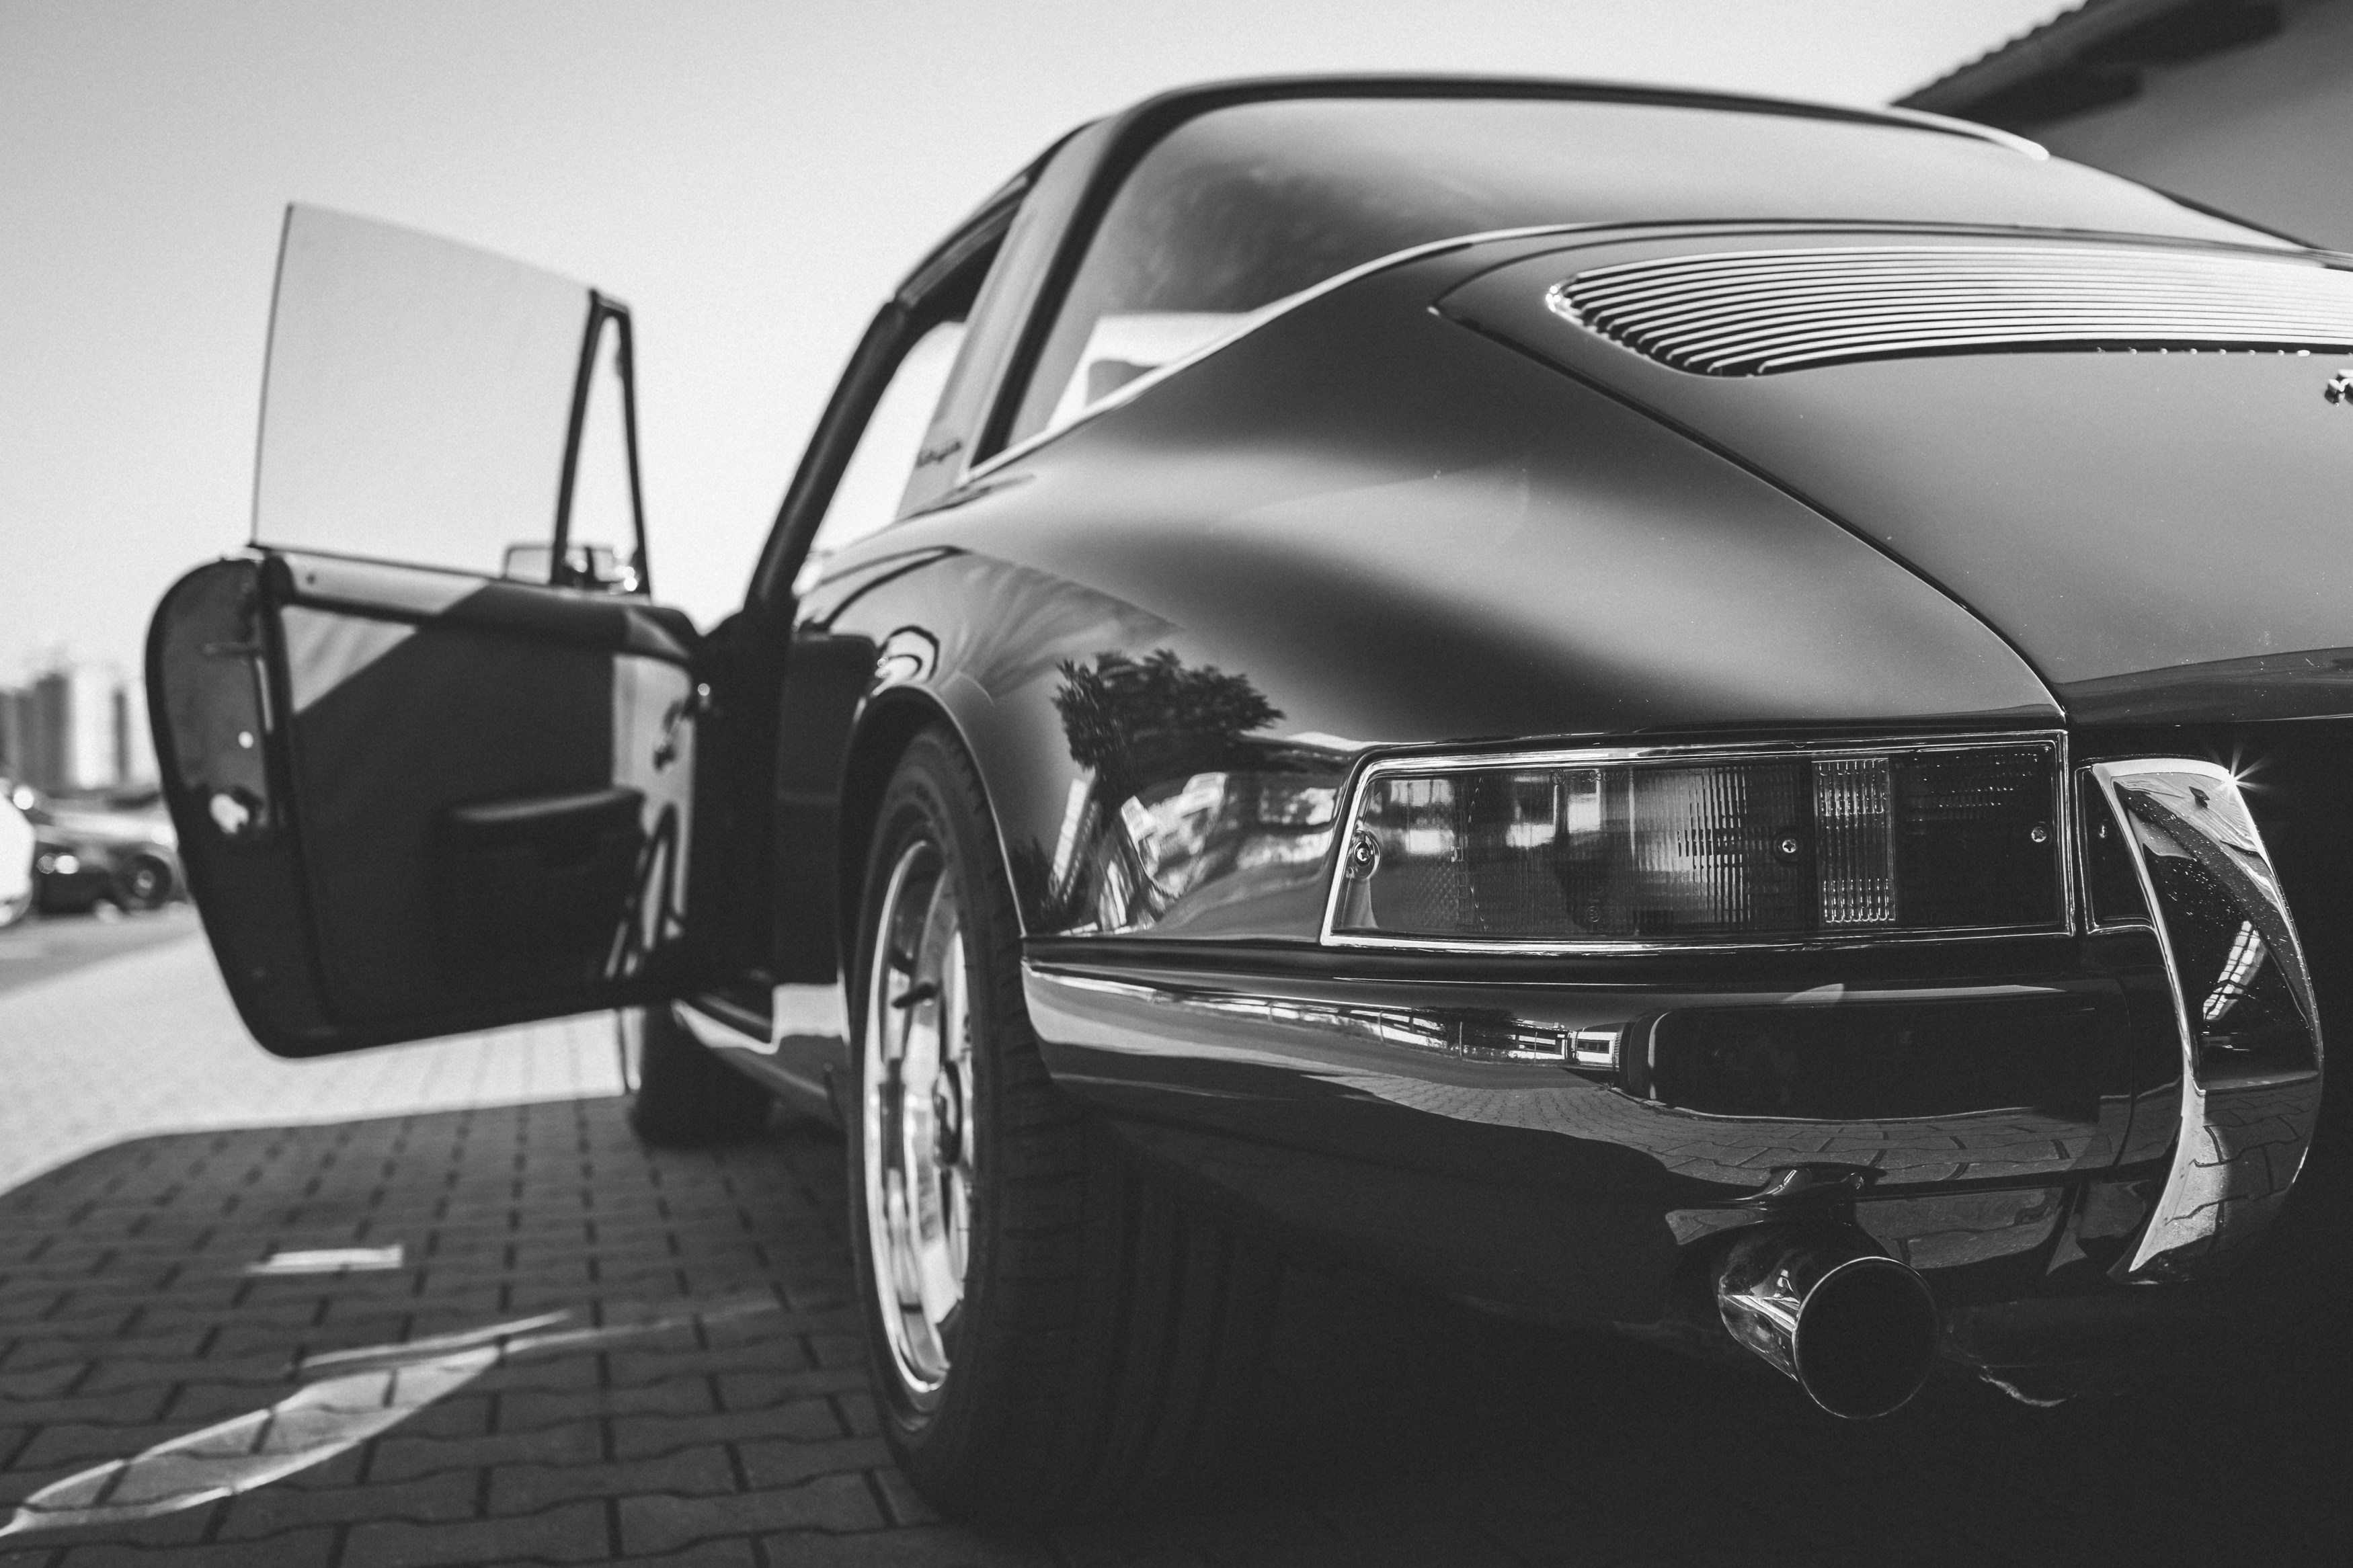 Vintage classic oldtimer sports car - iconic legendary Porsche 911 (Backdating)